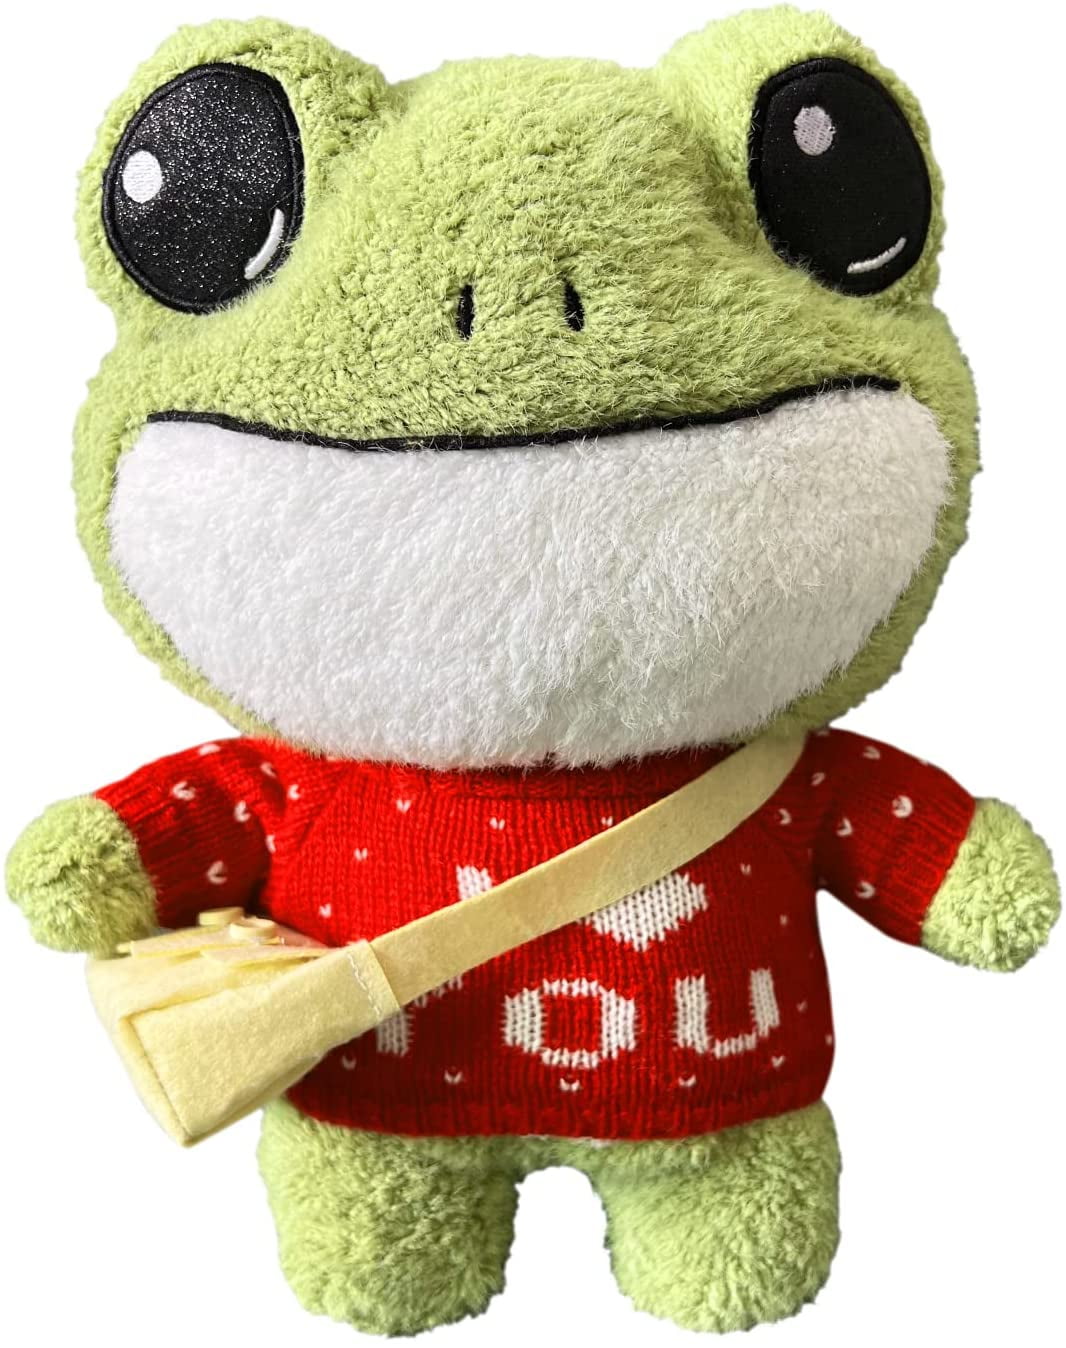 30CM Frog Stuffed Animal Plush dolls with sweater, bag - Walmart